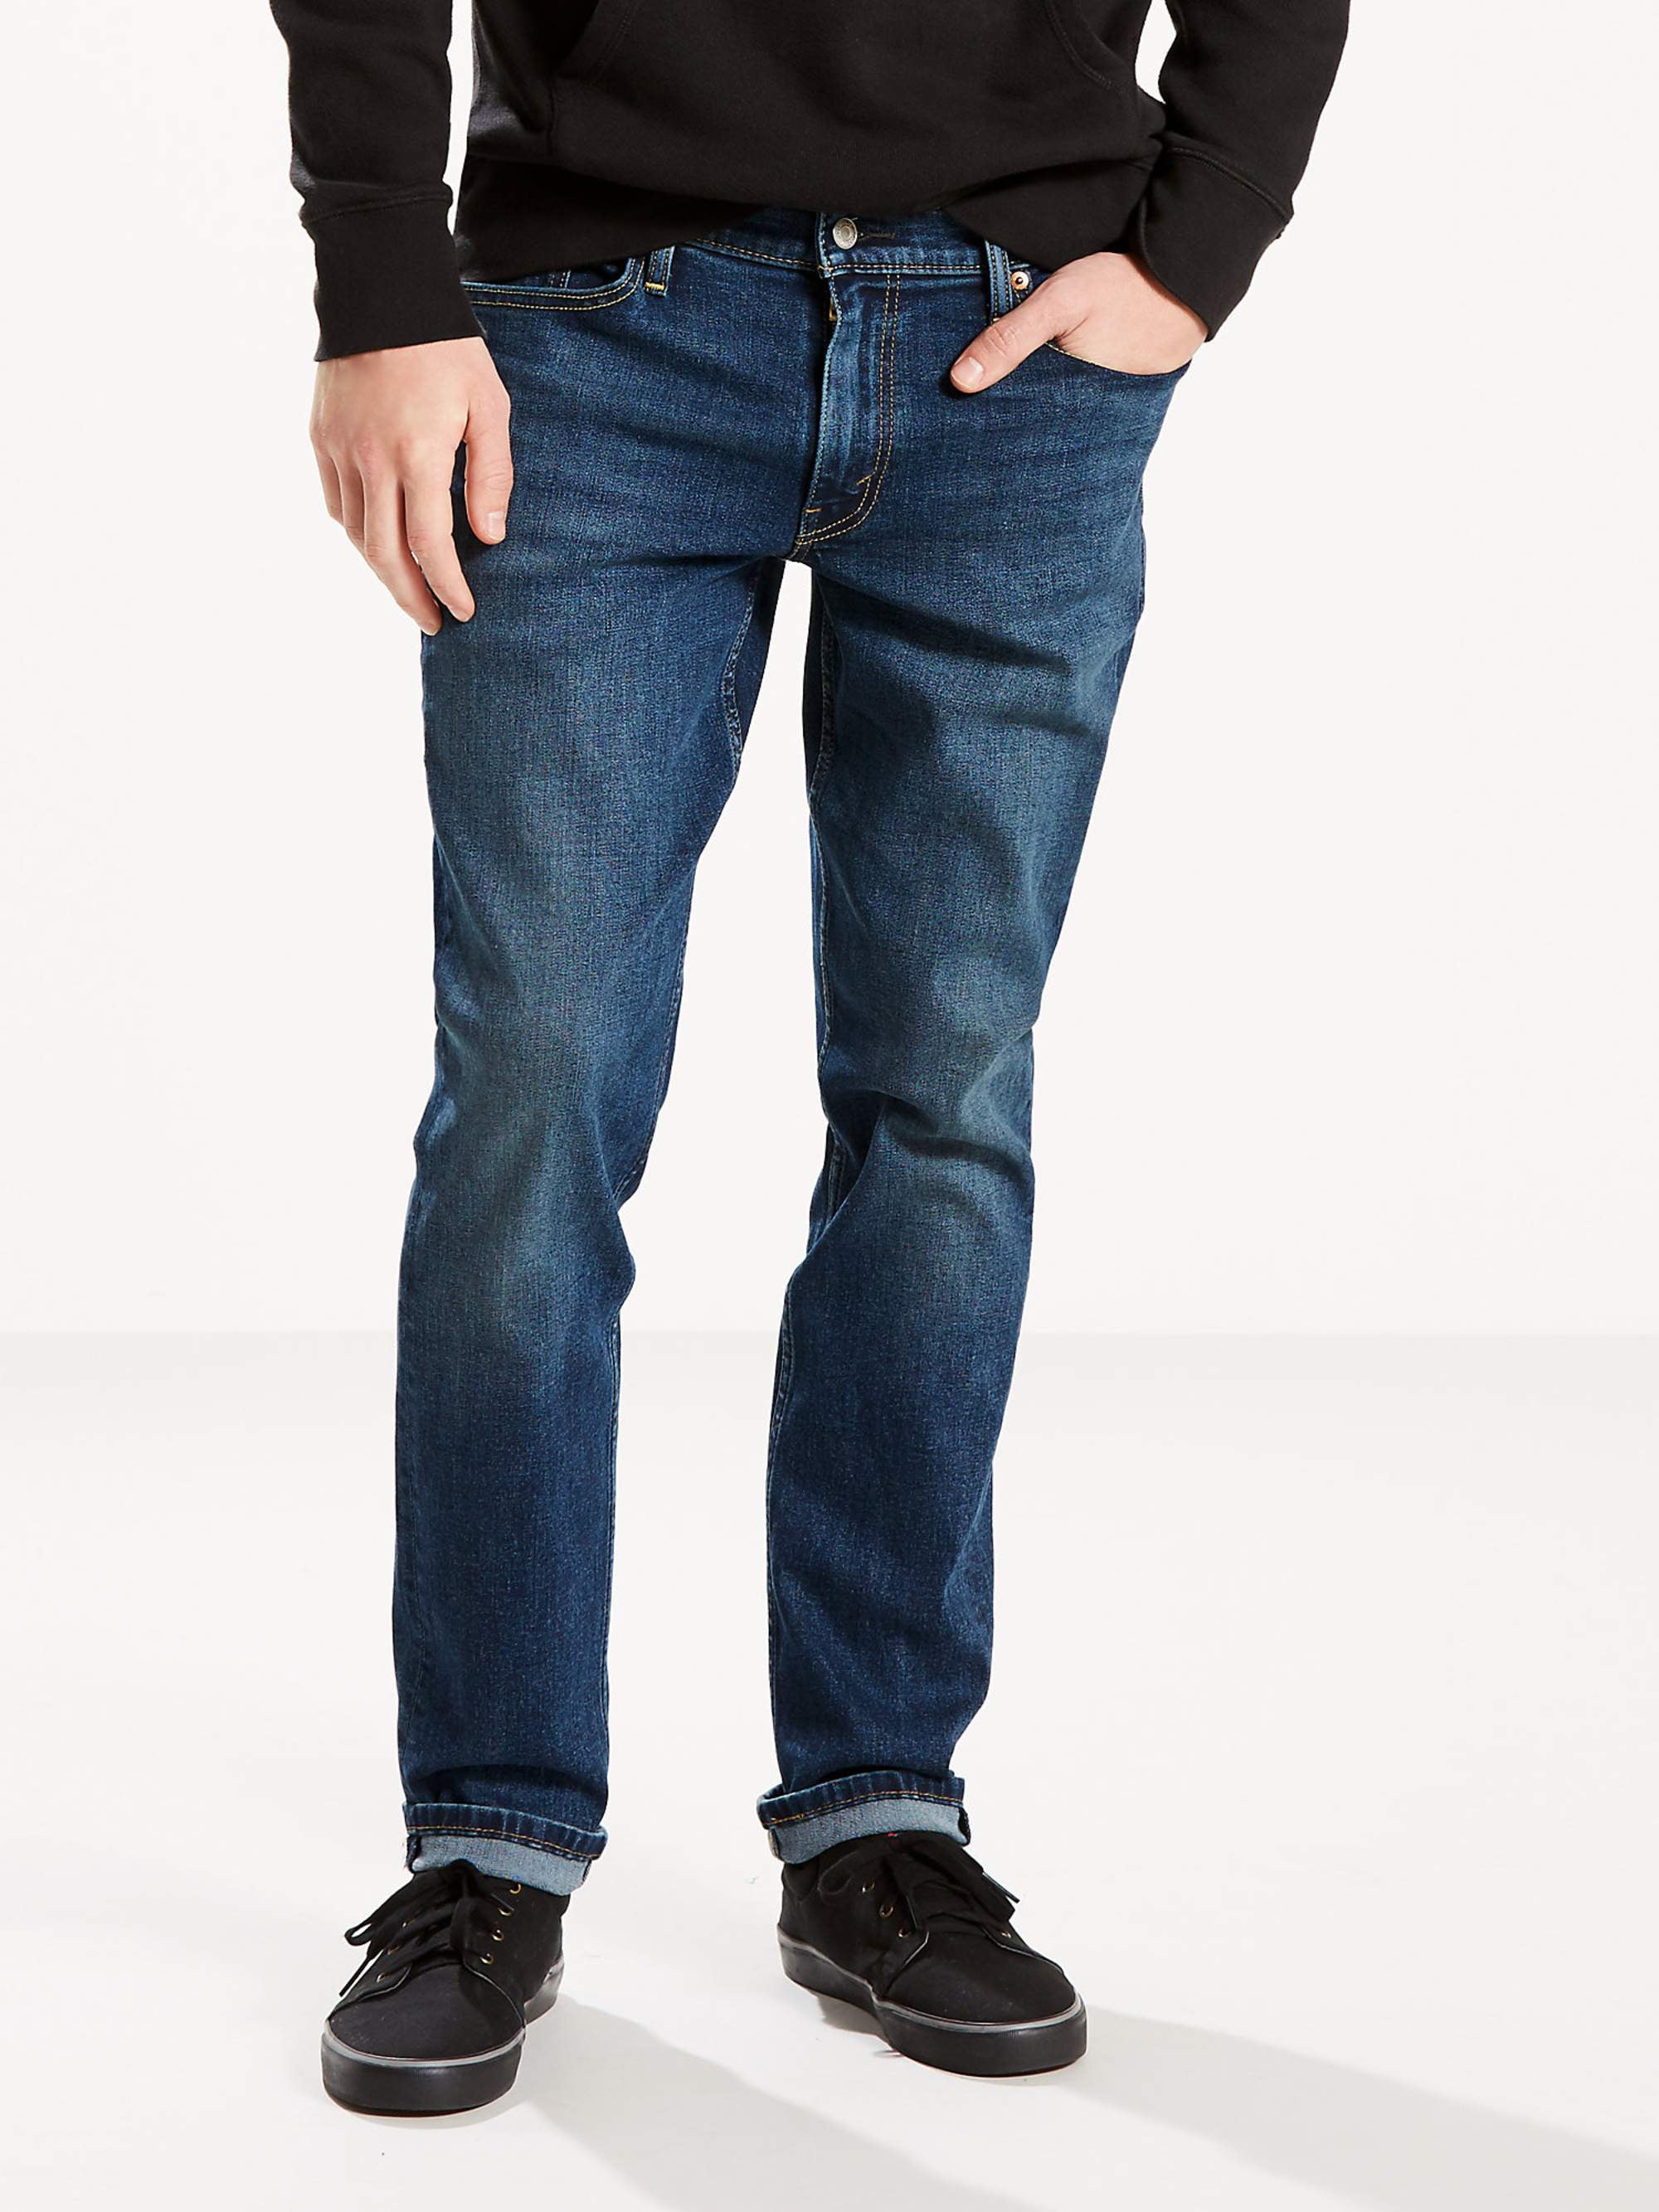 masa tono vino Levi's Men's 511 Slim Fit Jeans - Walmart.com